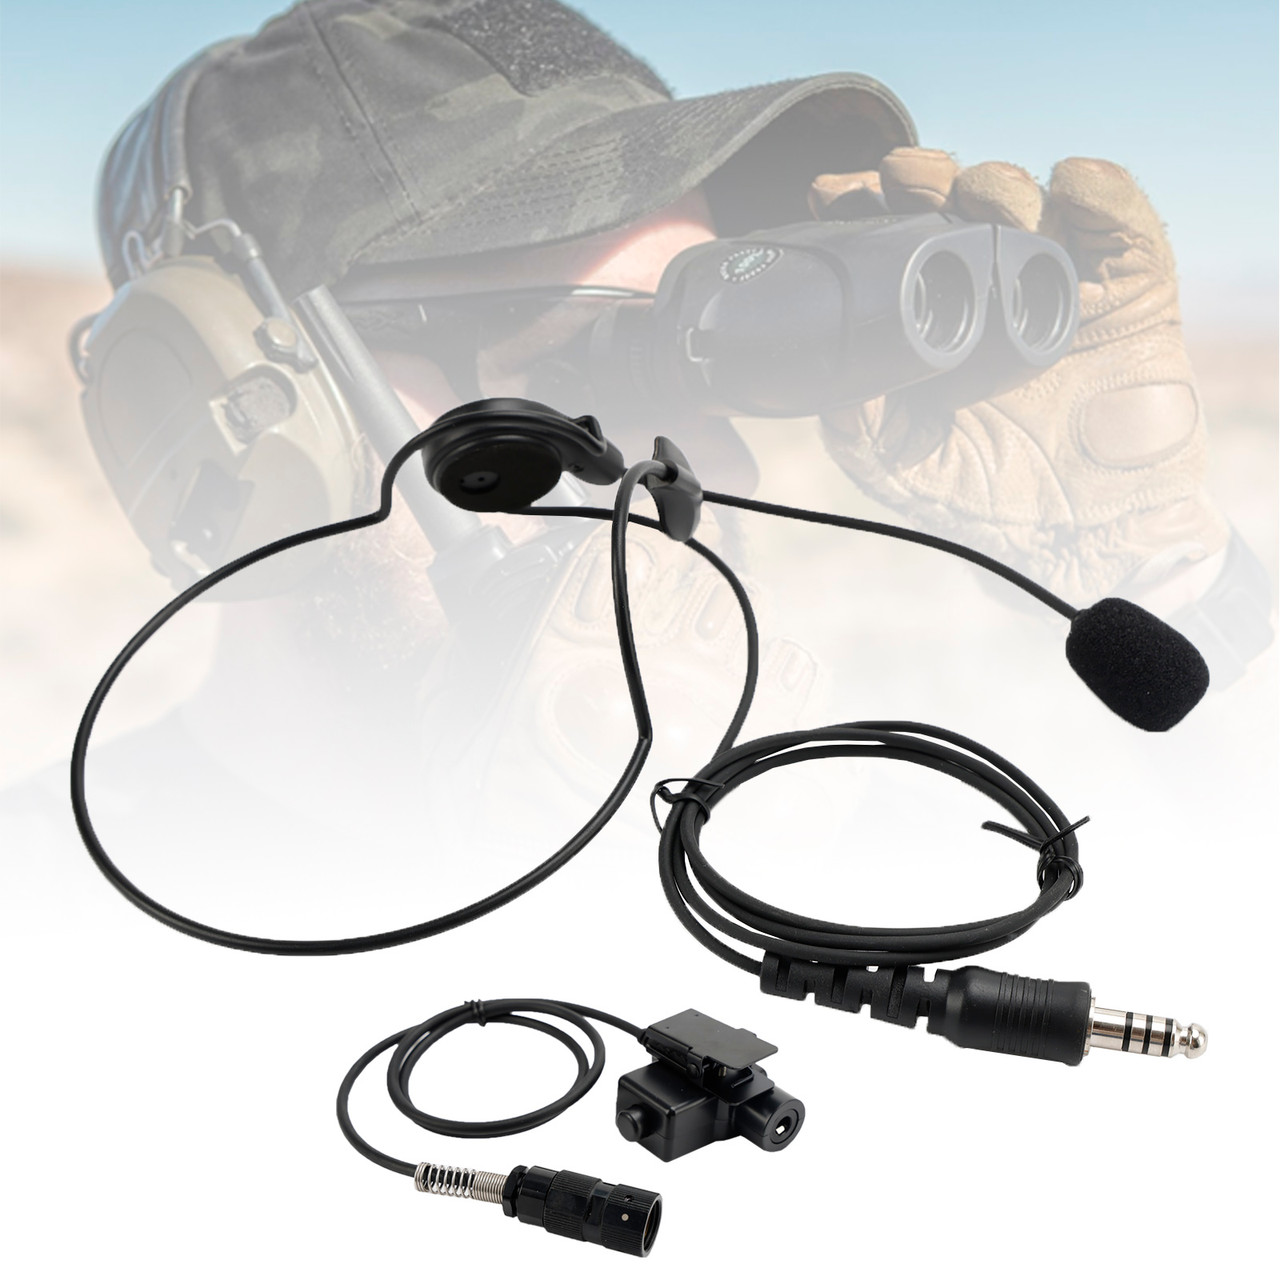 7.1-C7 Rear Mount Big Plug Tactical Headset For AN/PRC-152 AN/PRC-148 U329 Radio